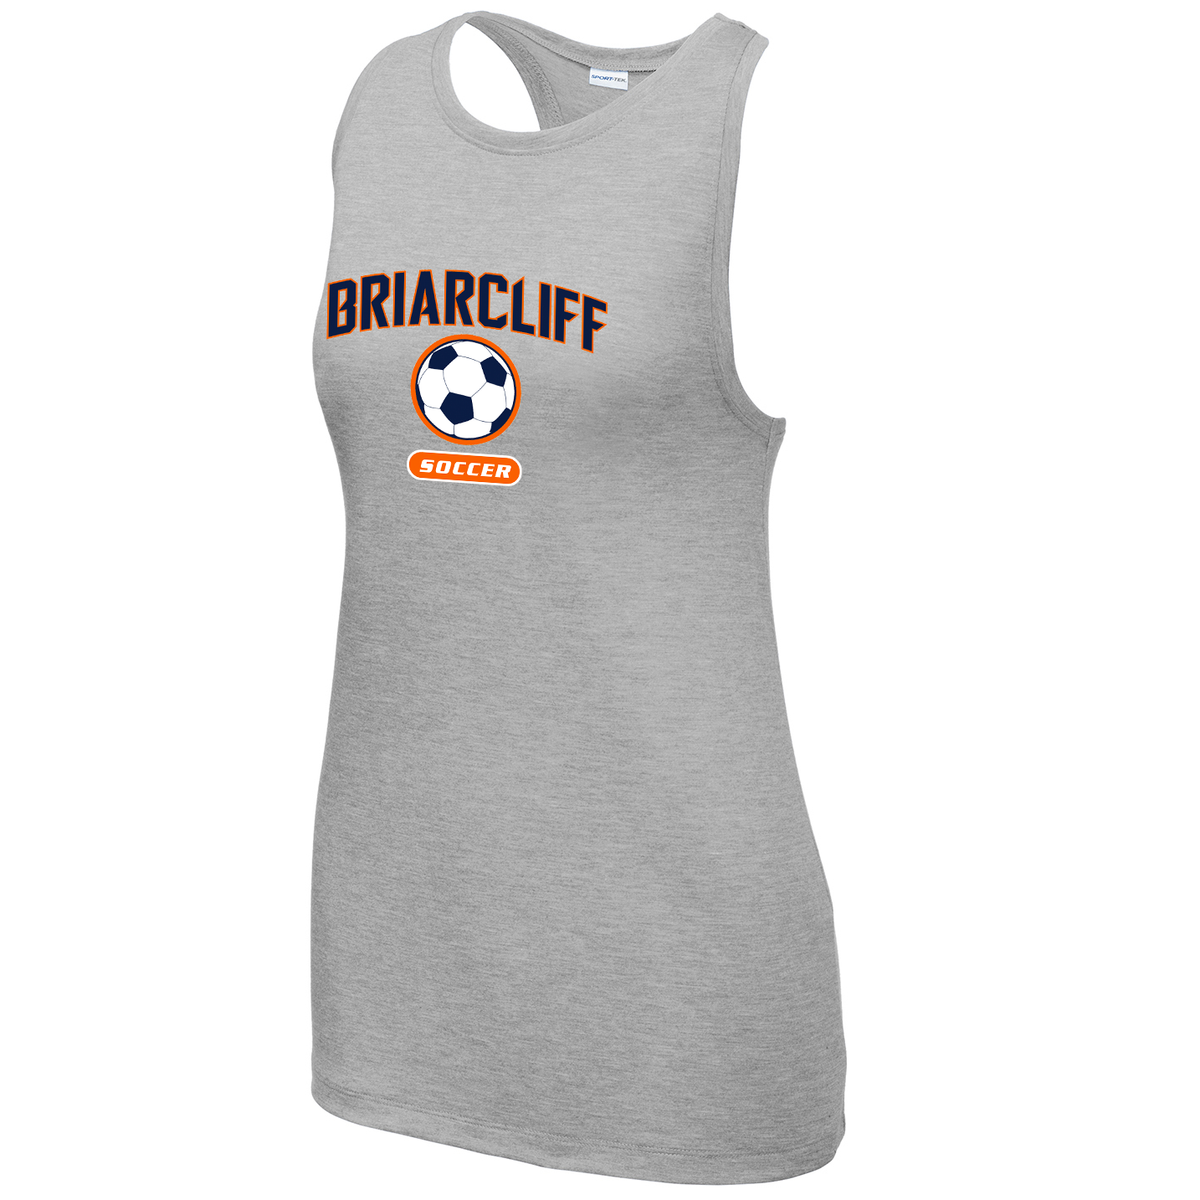 Briarcliff Soccer Women's Tri-Blend Wicking Racerback